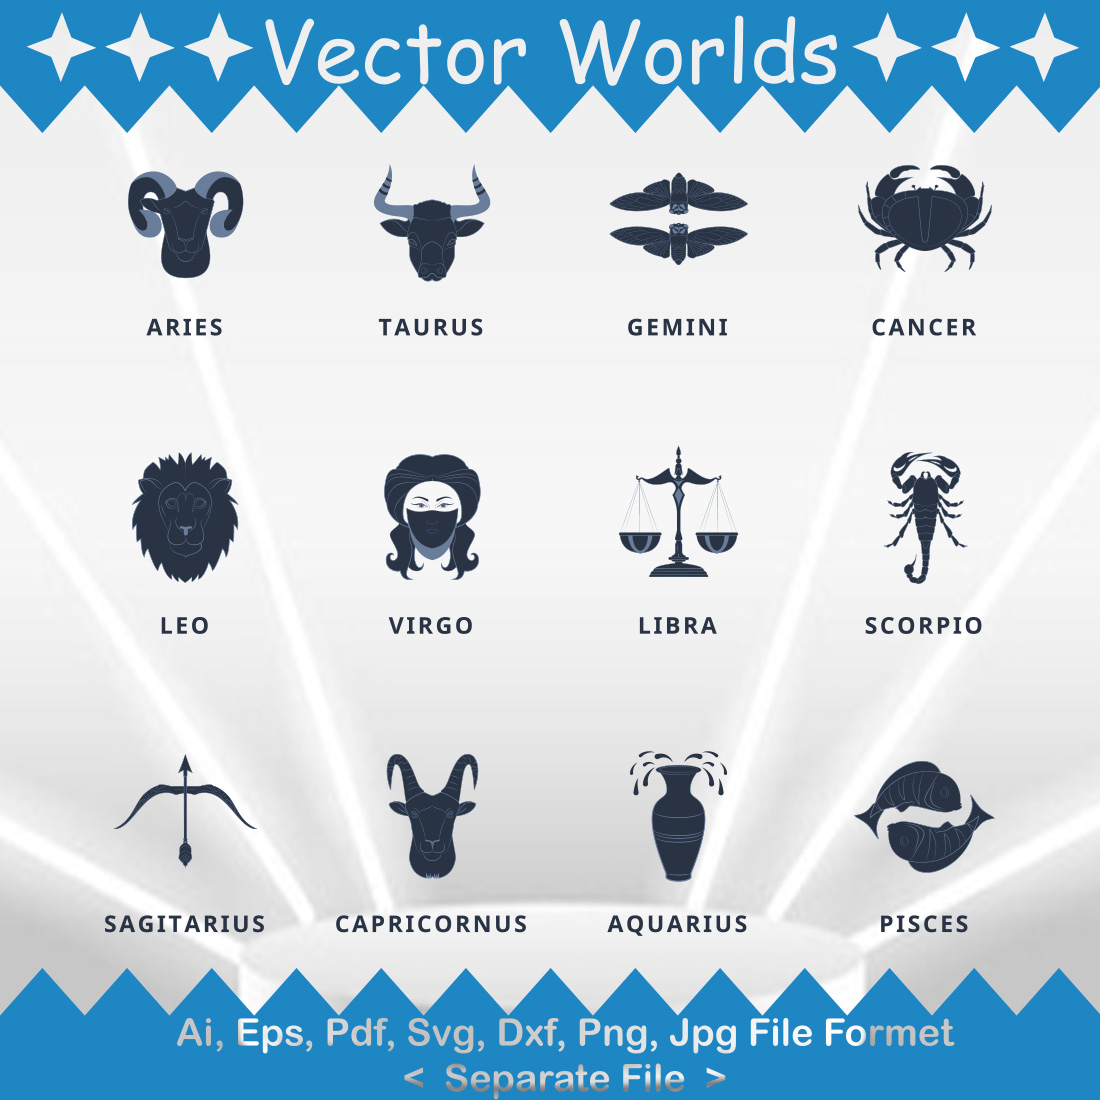 Zodiac Signs SVG Vector Design cover image.